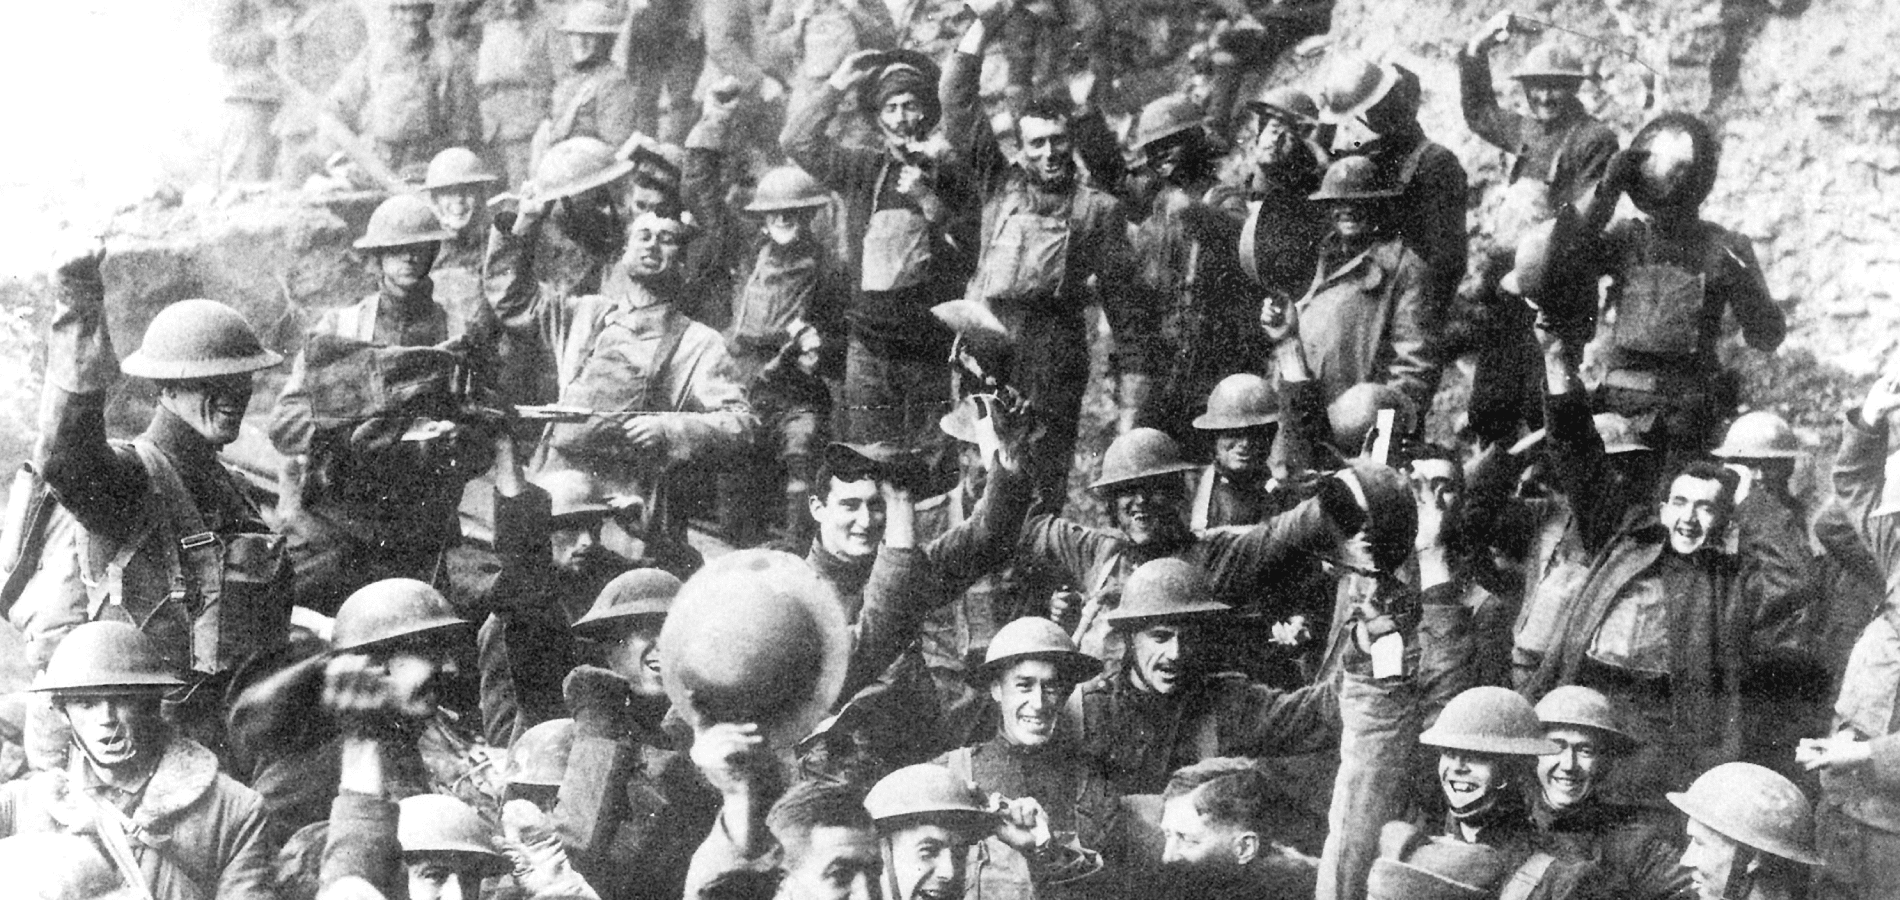 WW1 Soldiers celebrating the November 11, 1918 armistice